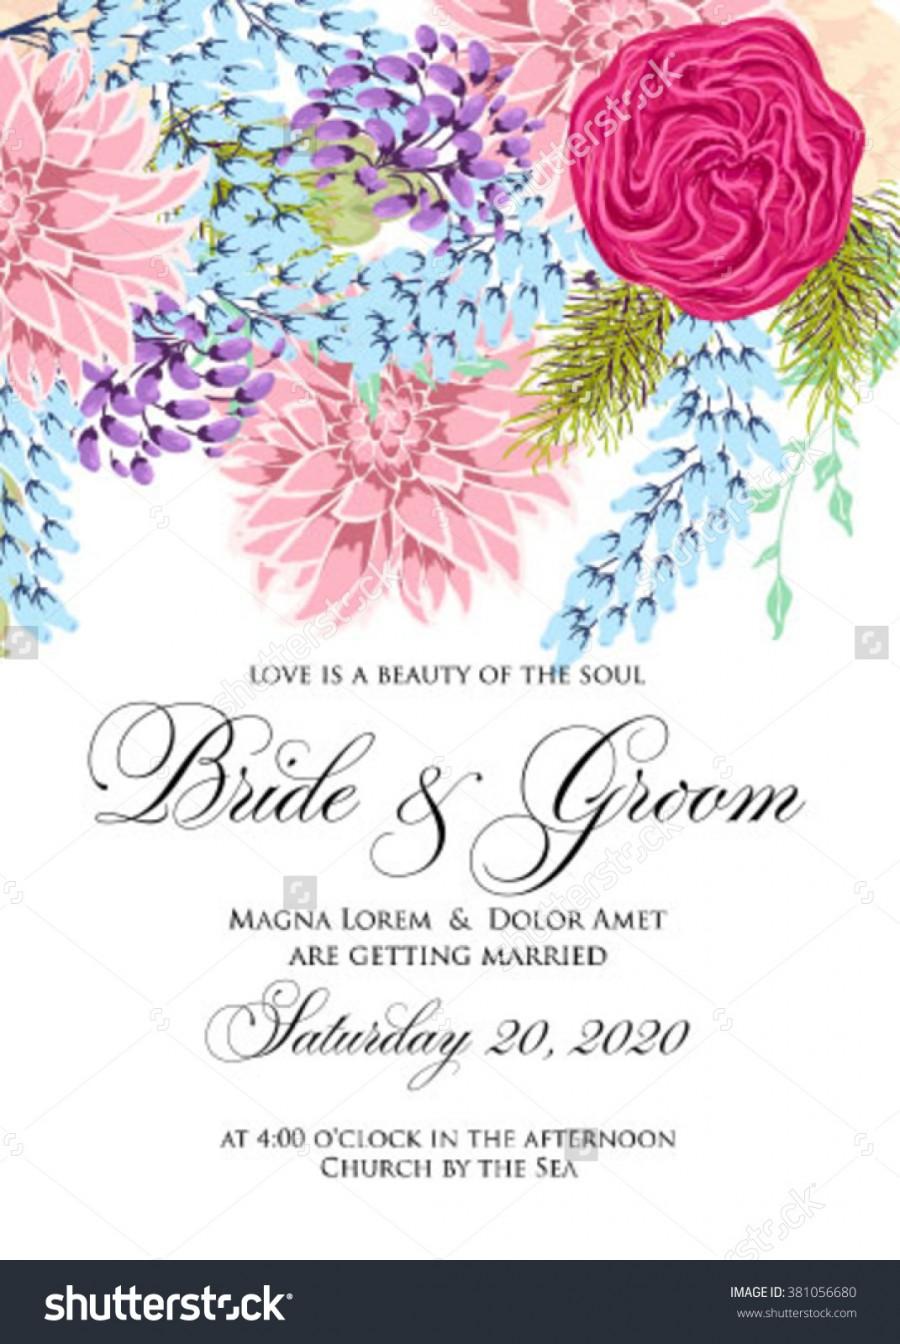 Wedding - Wedding card or invitation with chrysanthemum flowers on striped background